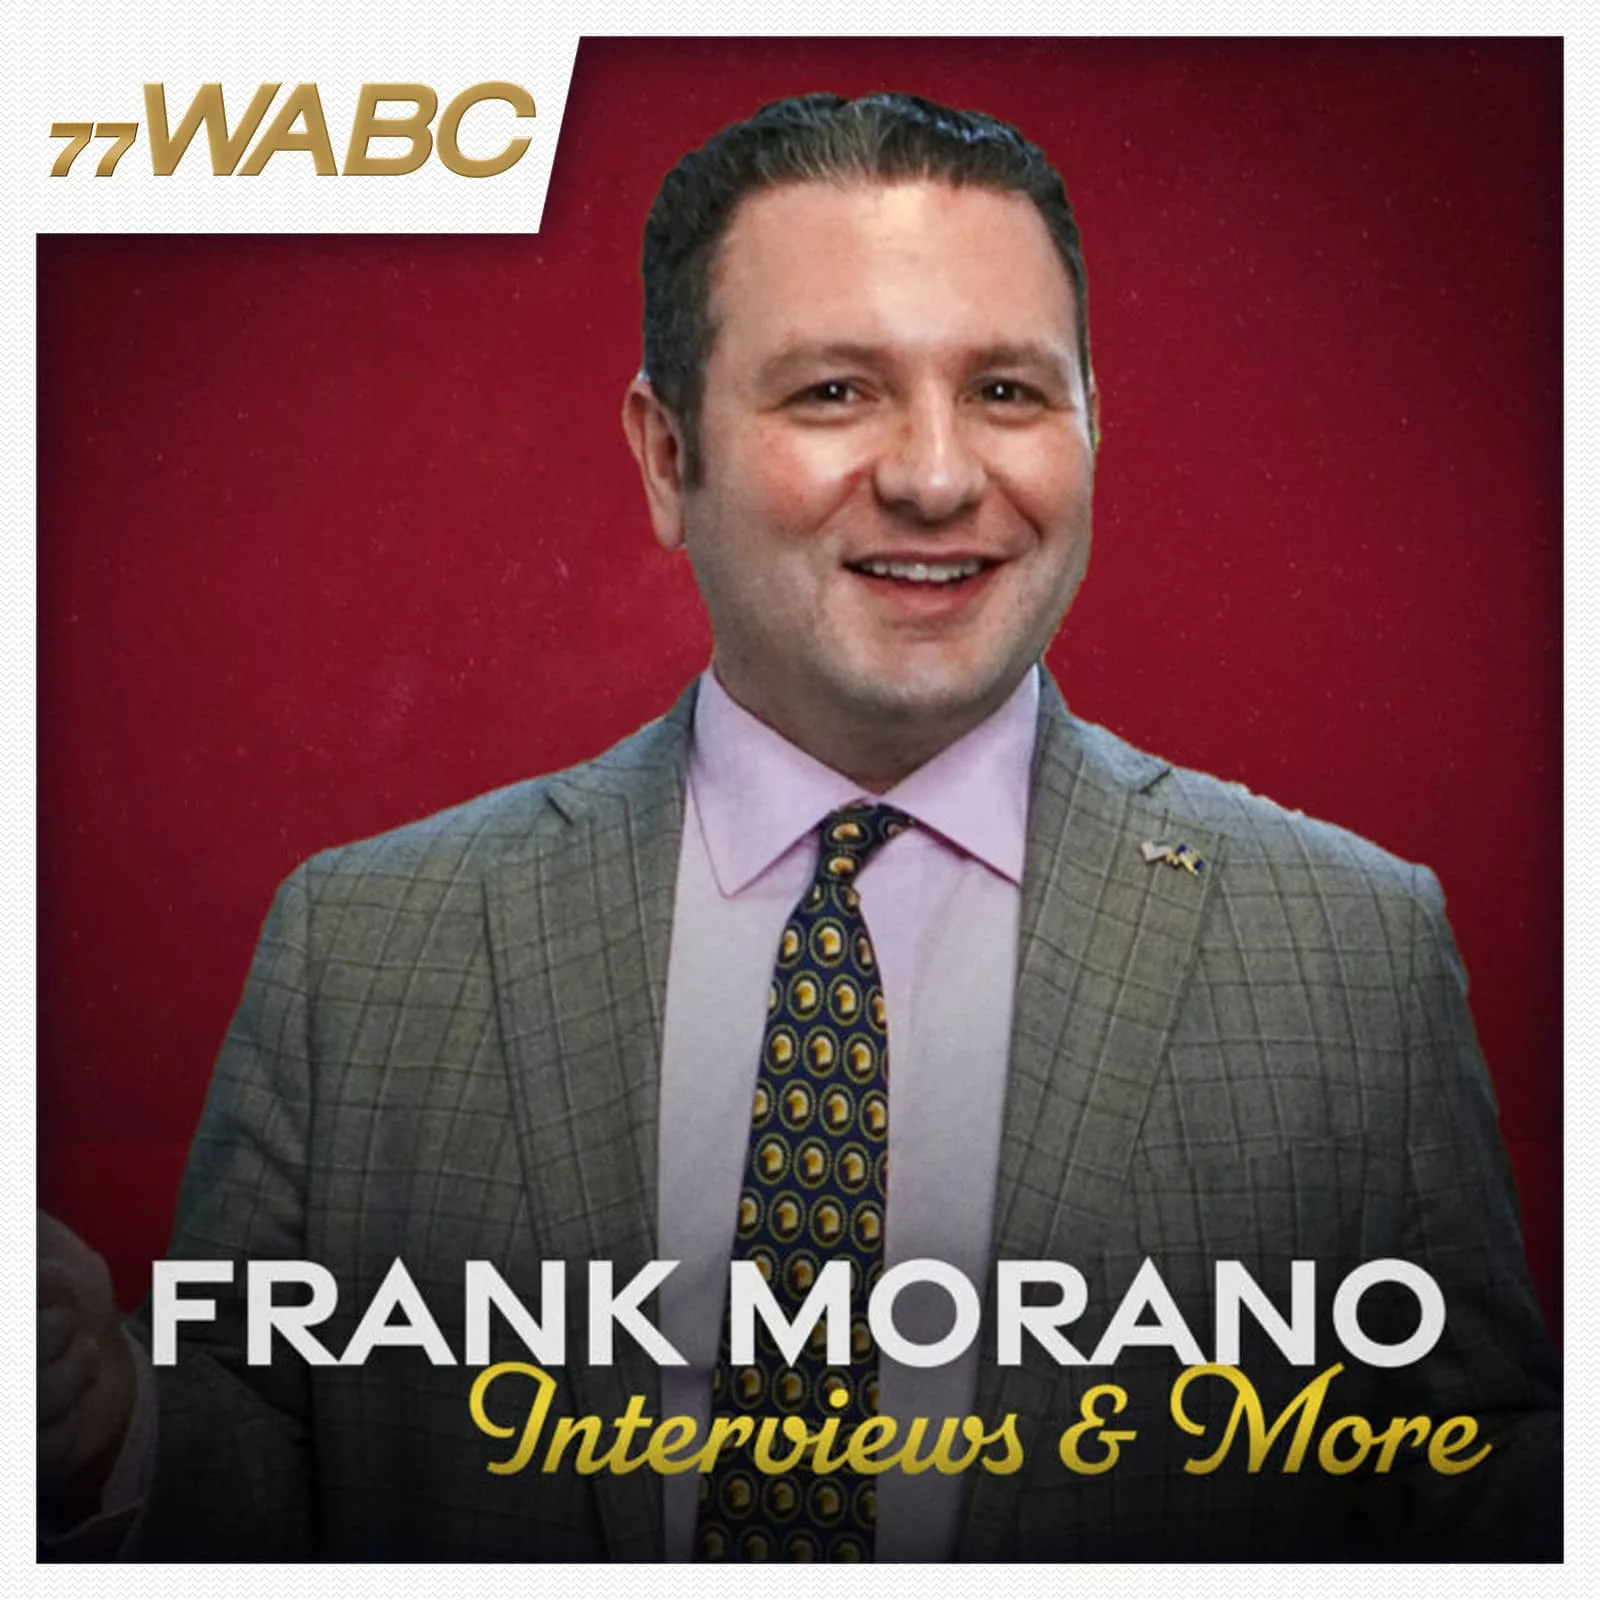 frank-morano-interviews-and-more-podcast-new-logo340382